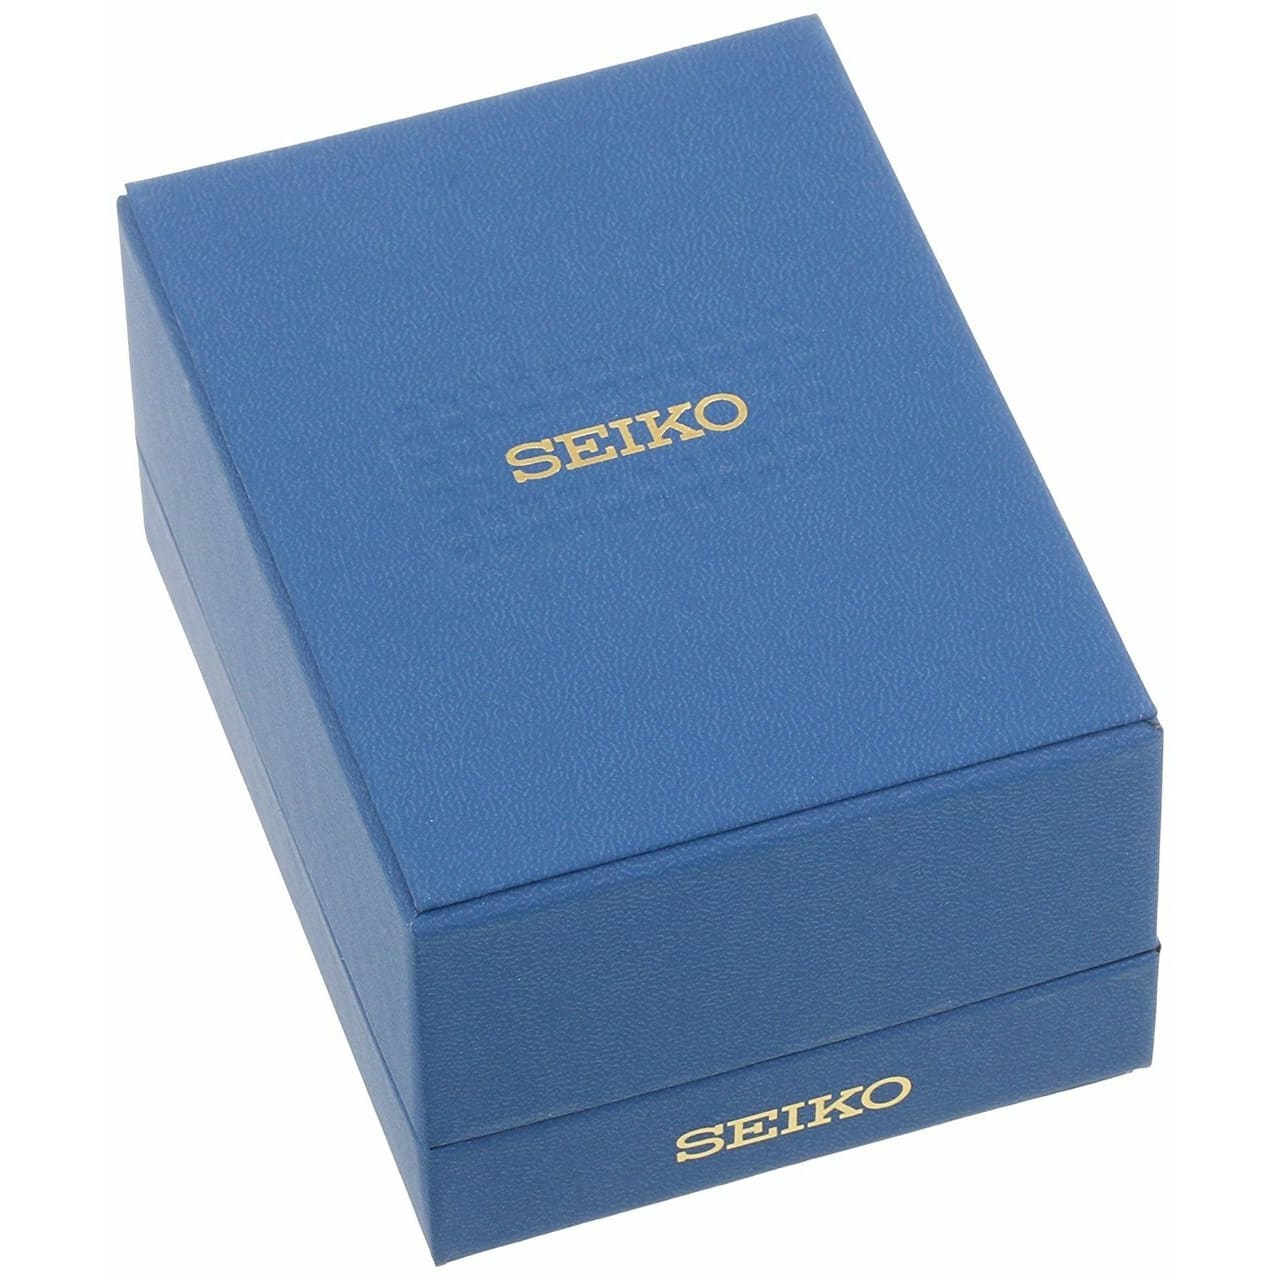 Original Seiko manufactures gift box